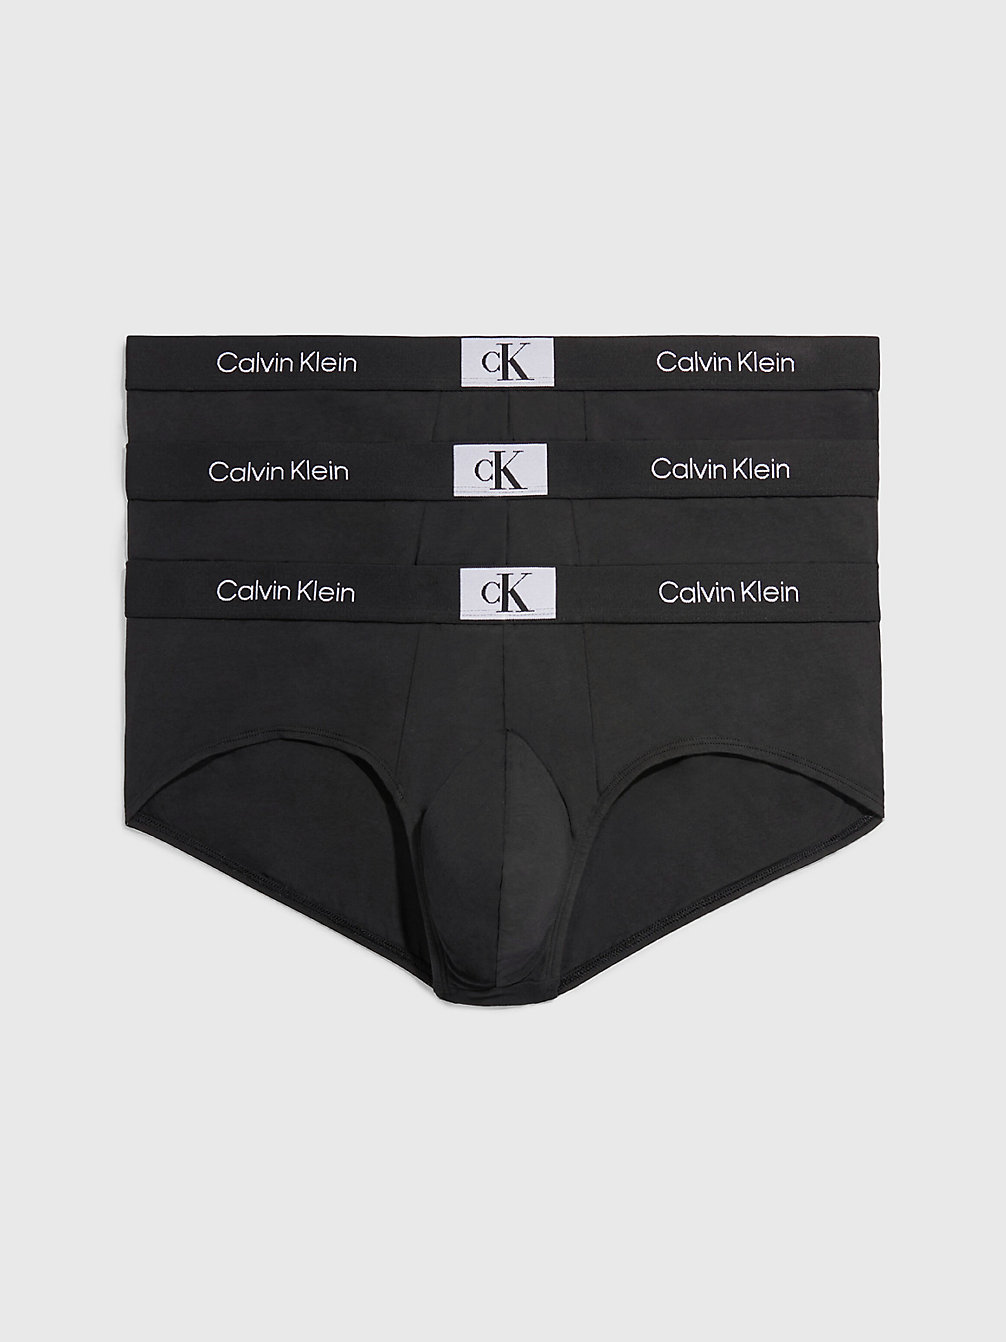 BLACK/BLACK/BLACK > 3-Er Pack Boxershorts In Übergröße - Ck96 > undefined Herren - Calvin Klein